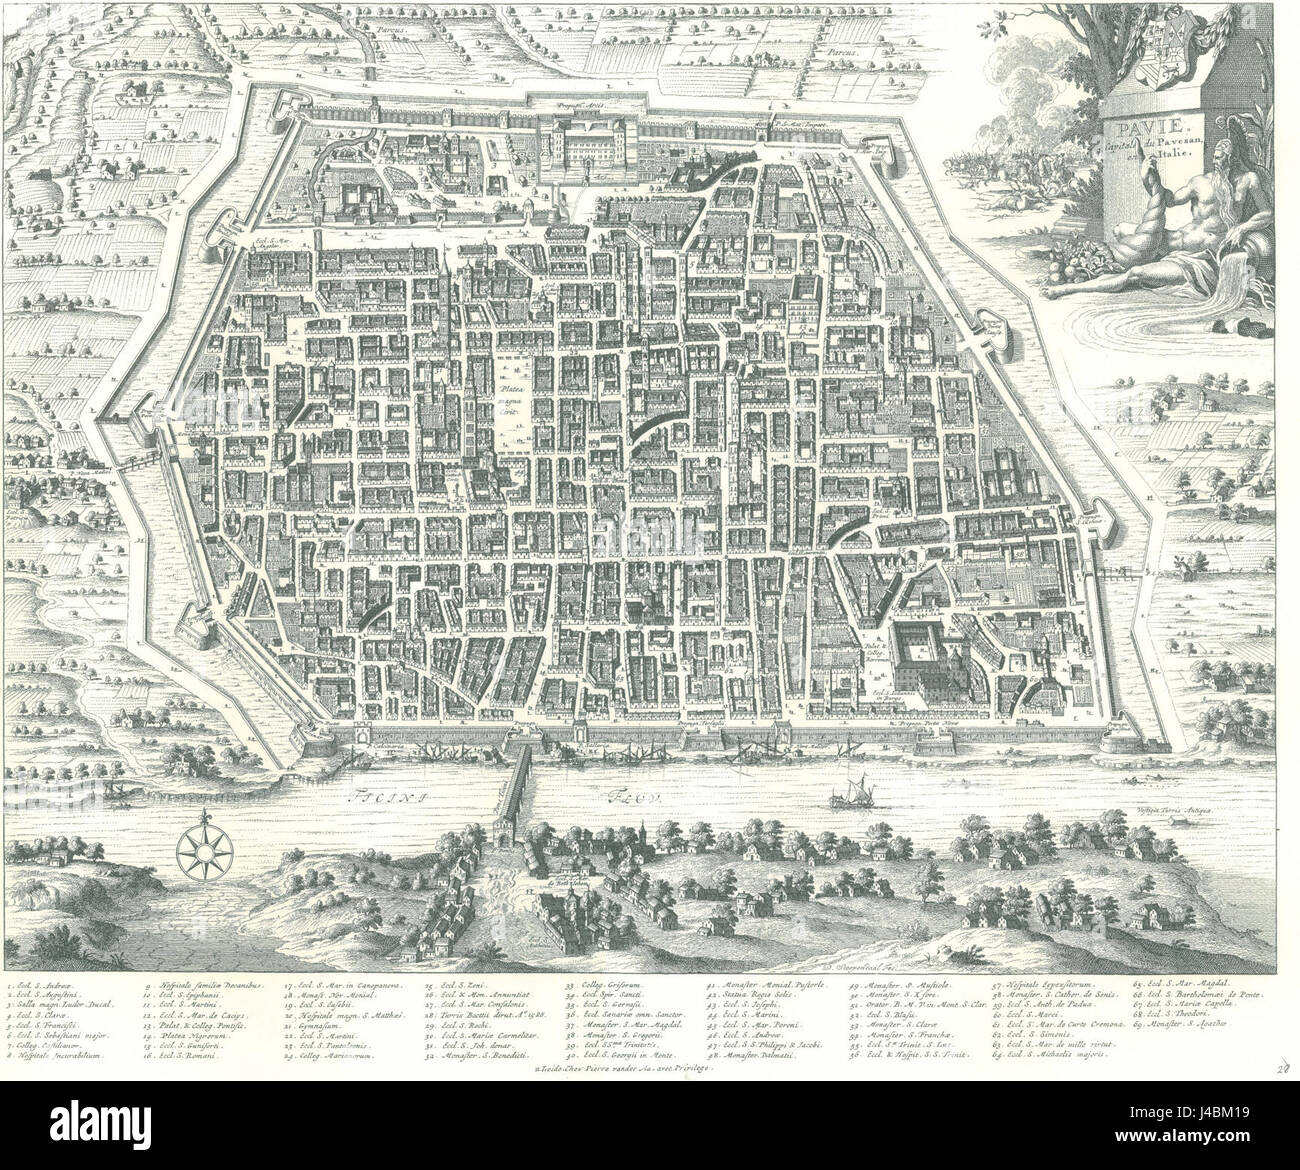 Pieter van der Aa, mappa di Pavia Foto stock - Alamy